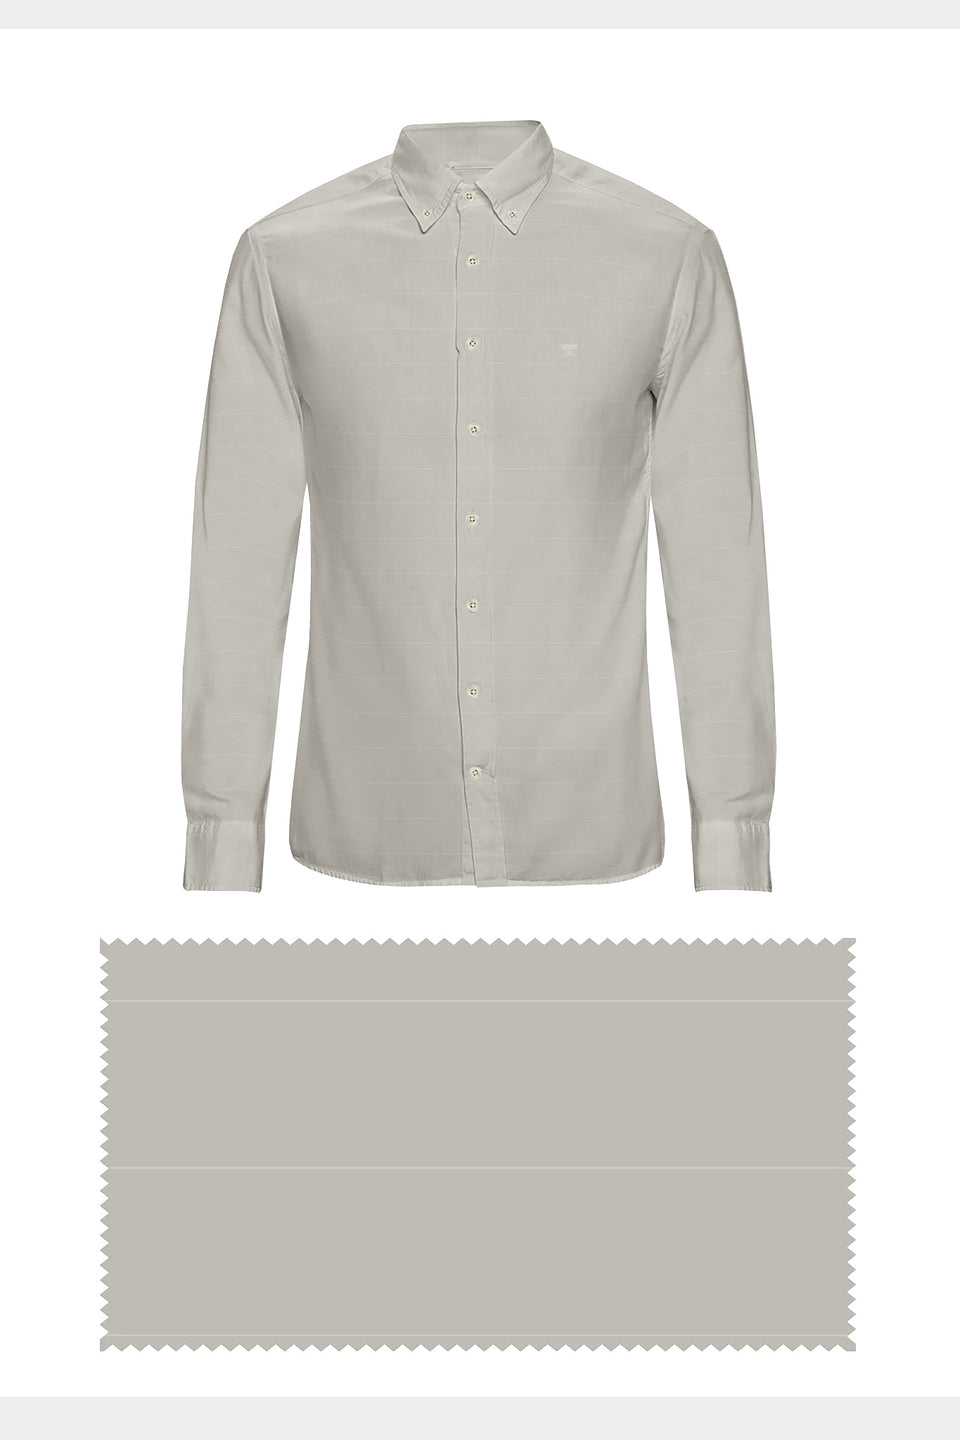 Hemploom - Elegant Hemp Shirt in Grey - CBD Store India